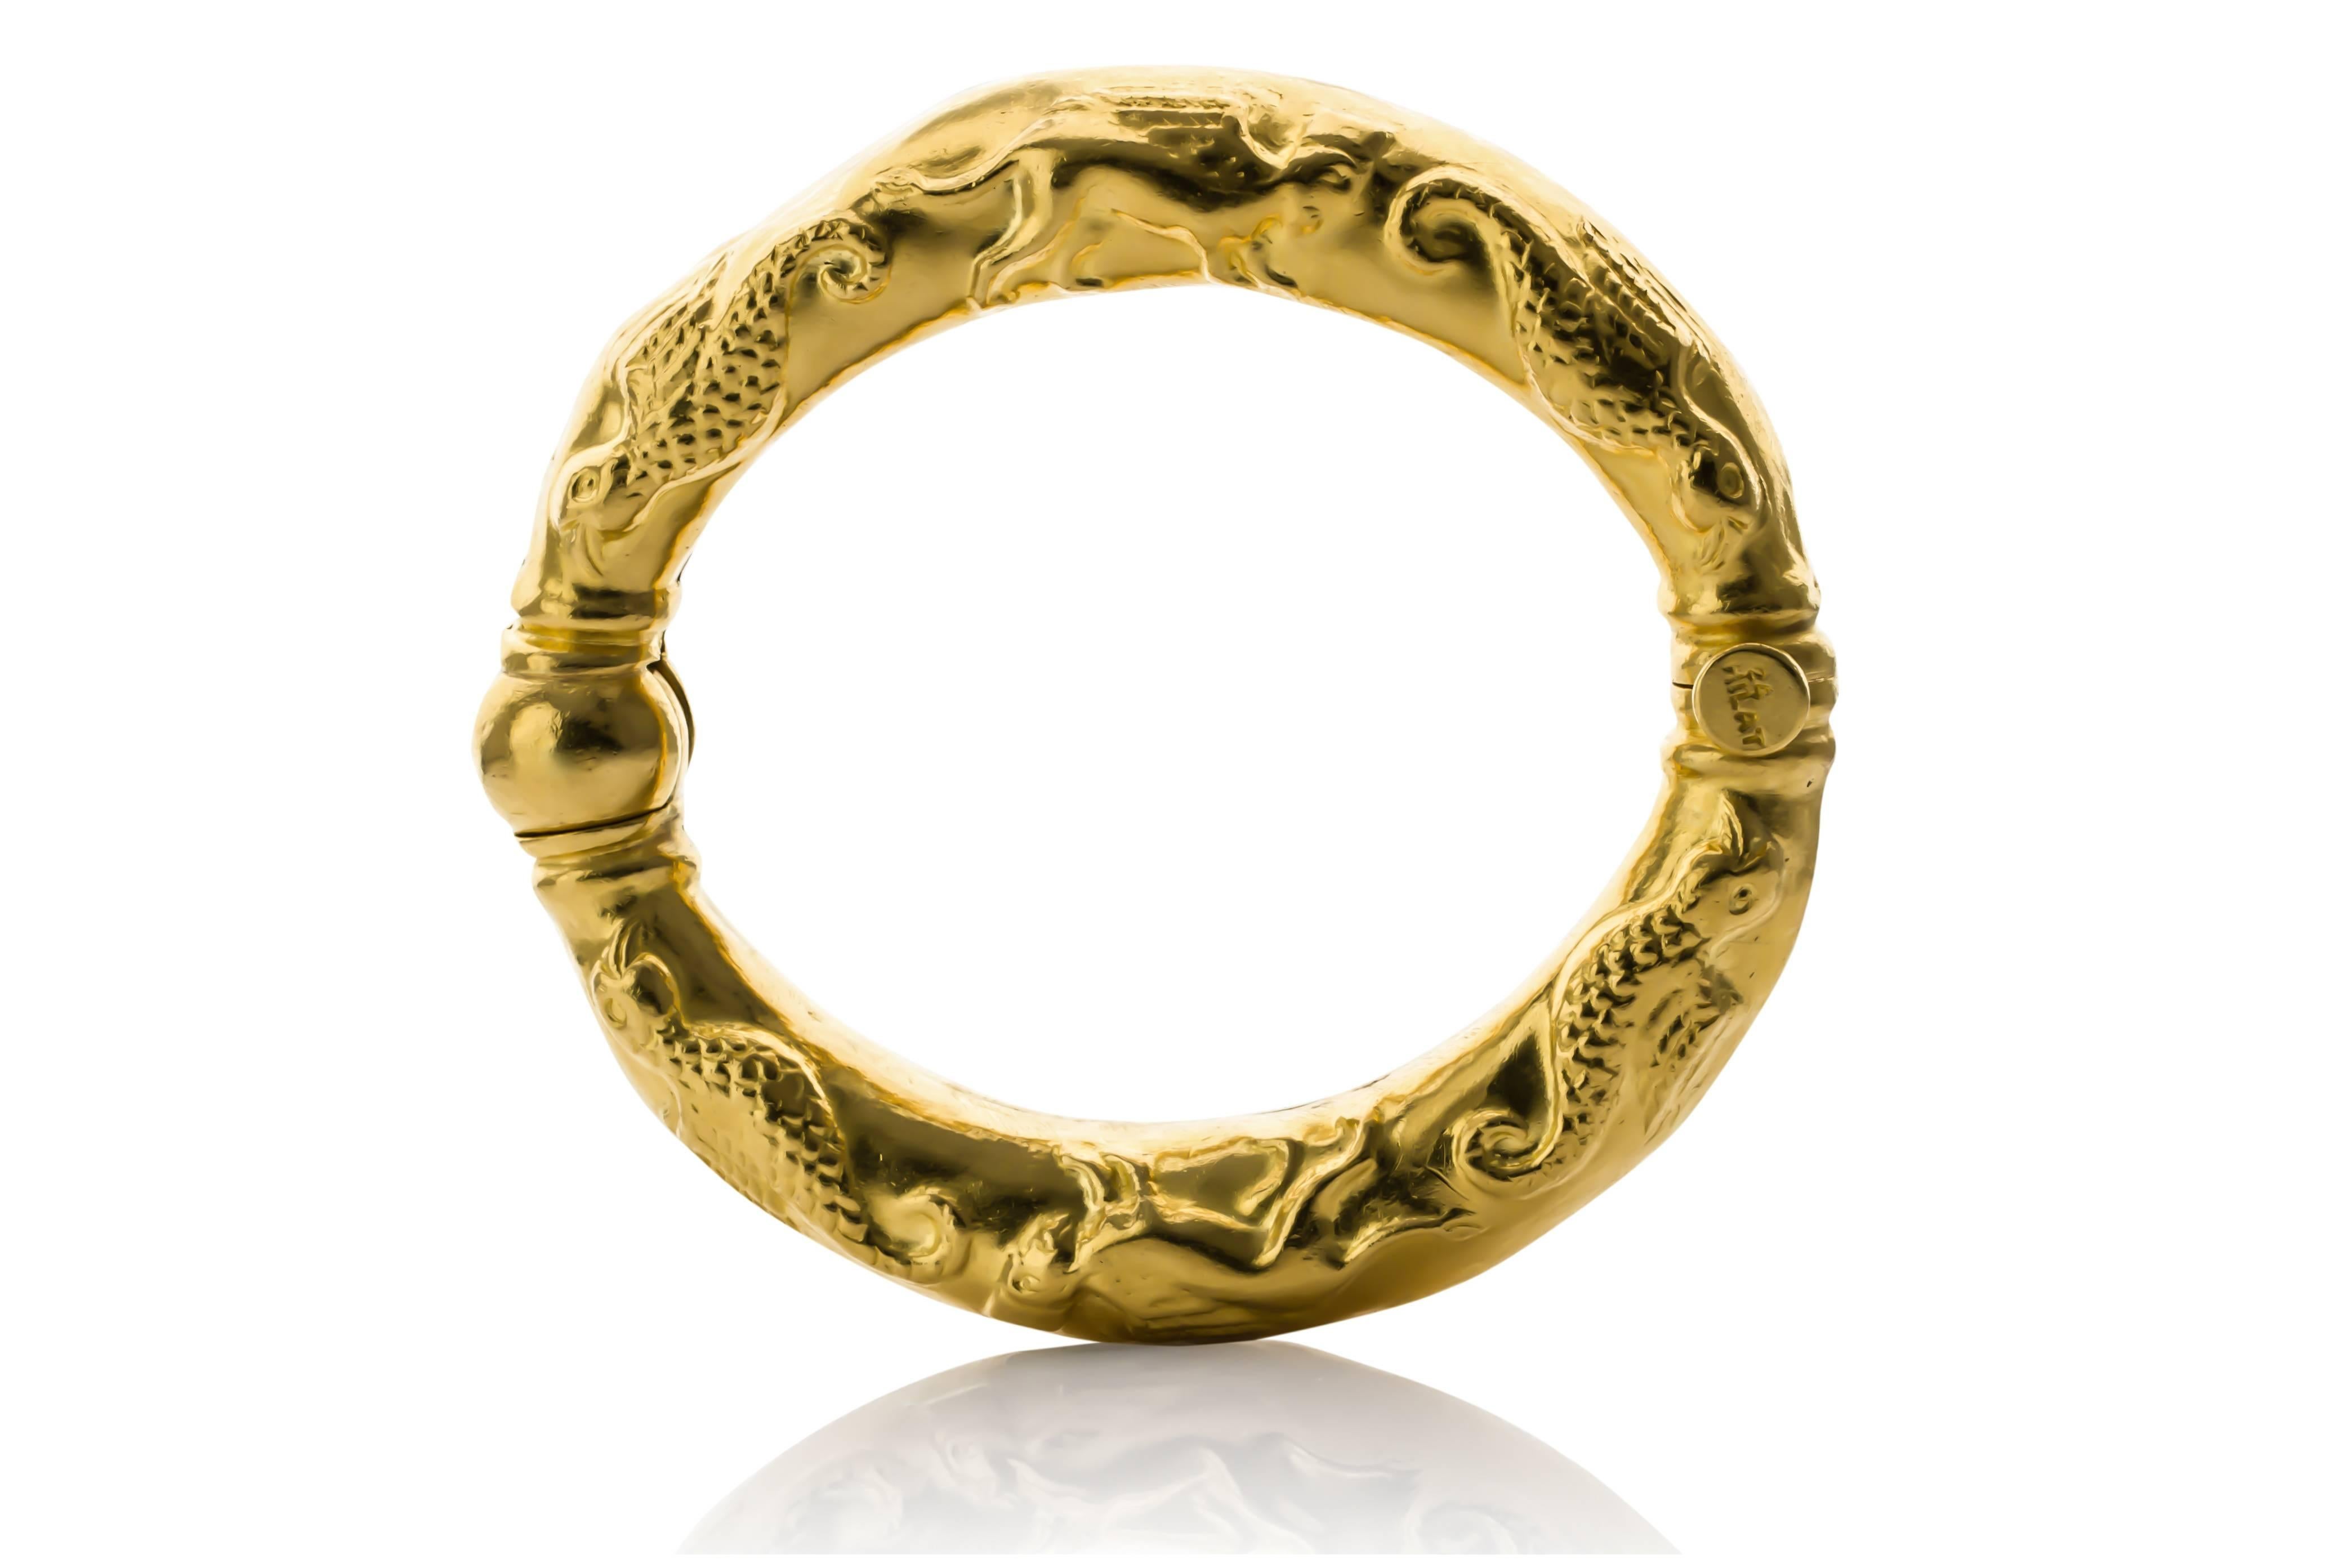 Estate 24K yellow gold babylon hinged animal patterned bracelet, by Hilat.  41.2 dwt. 